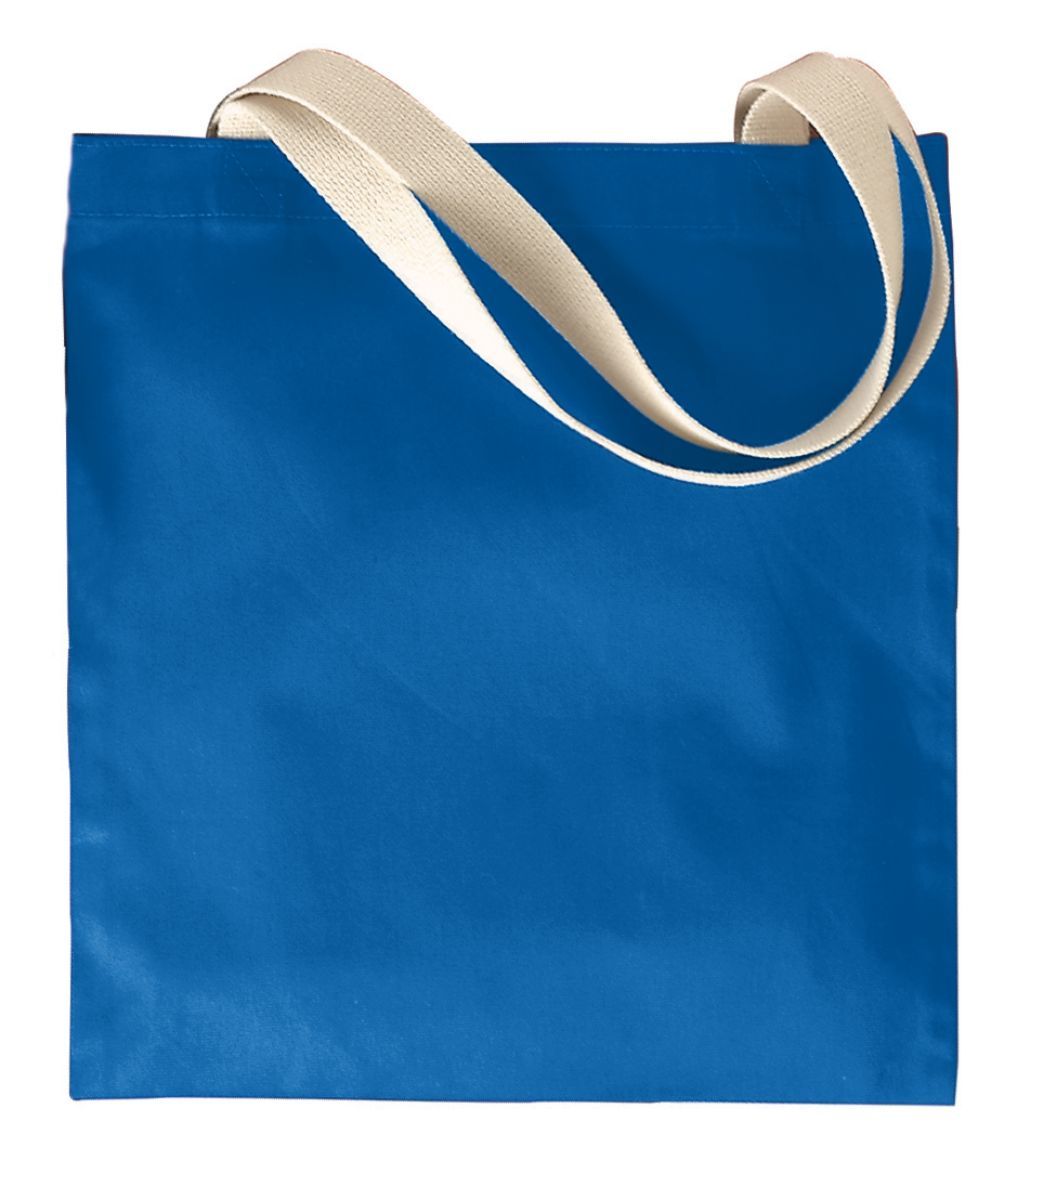 Augusta Sportswear Promotional Tote Bag